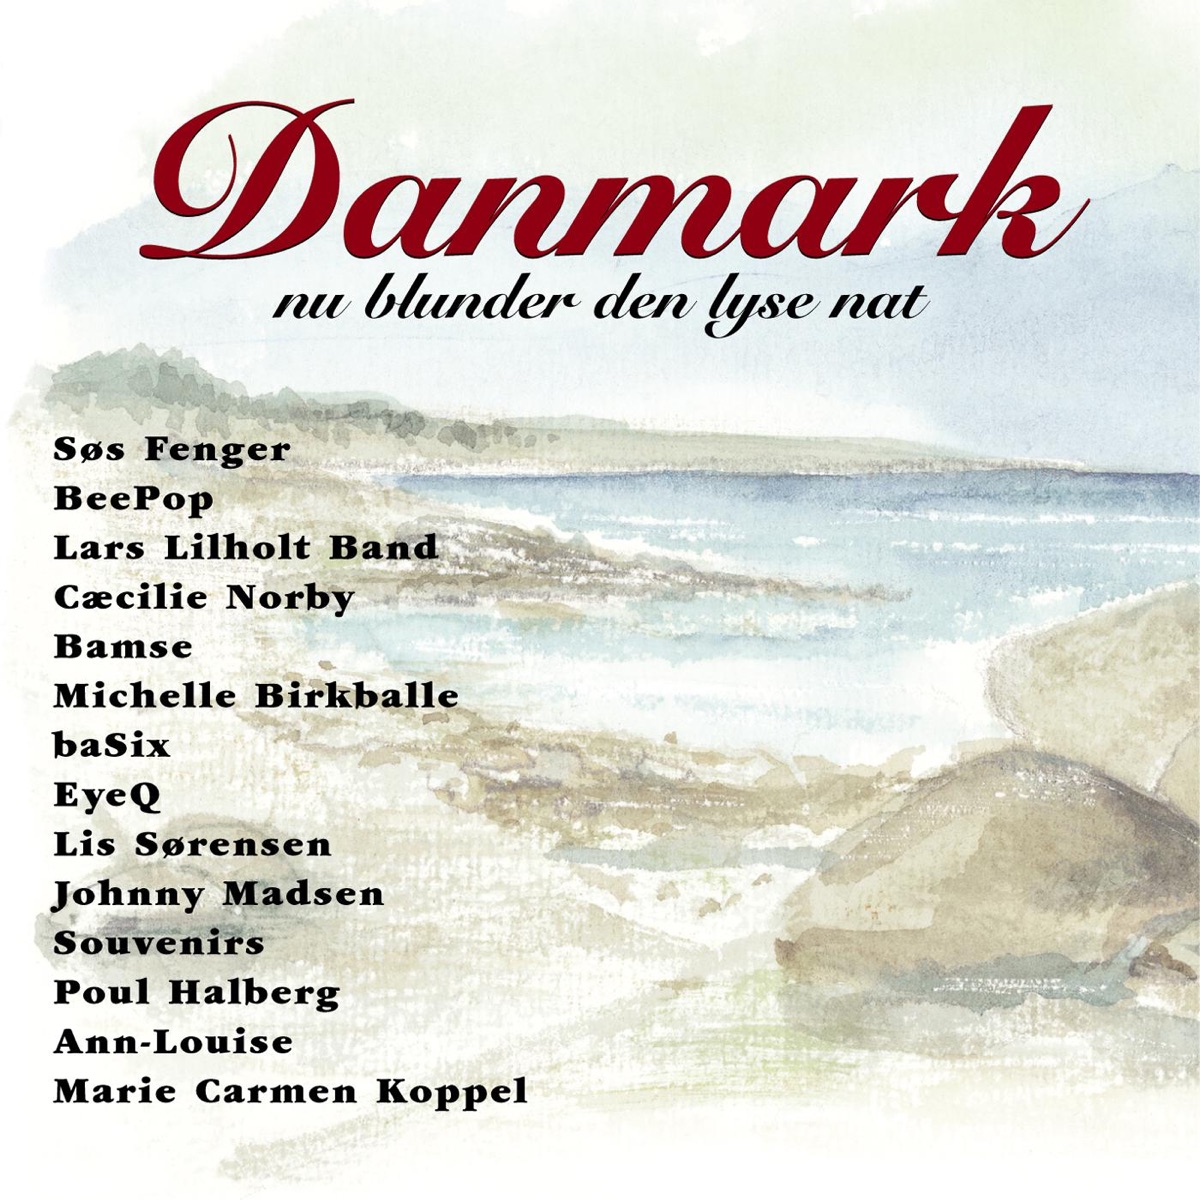 Danmark Nu Blunder Den Lyse Nat by Various Artists on Apple Music